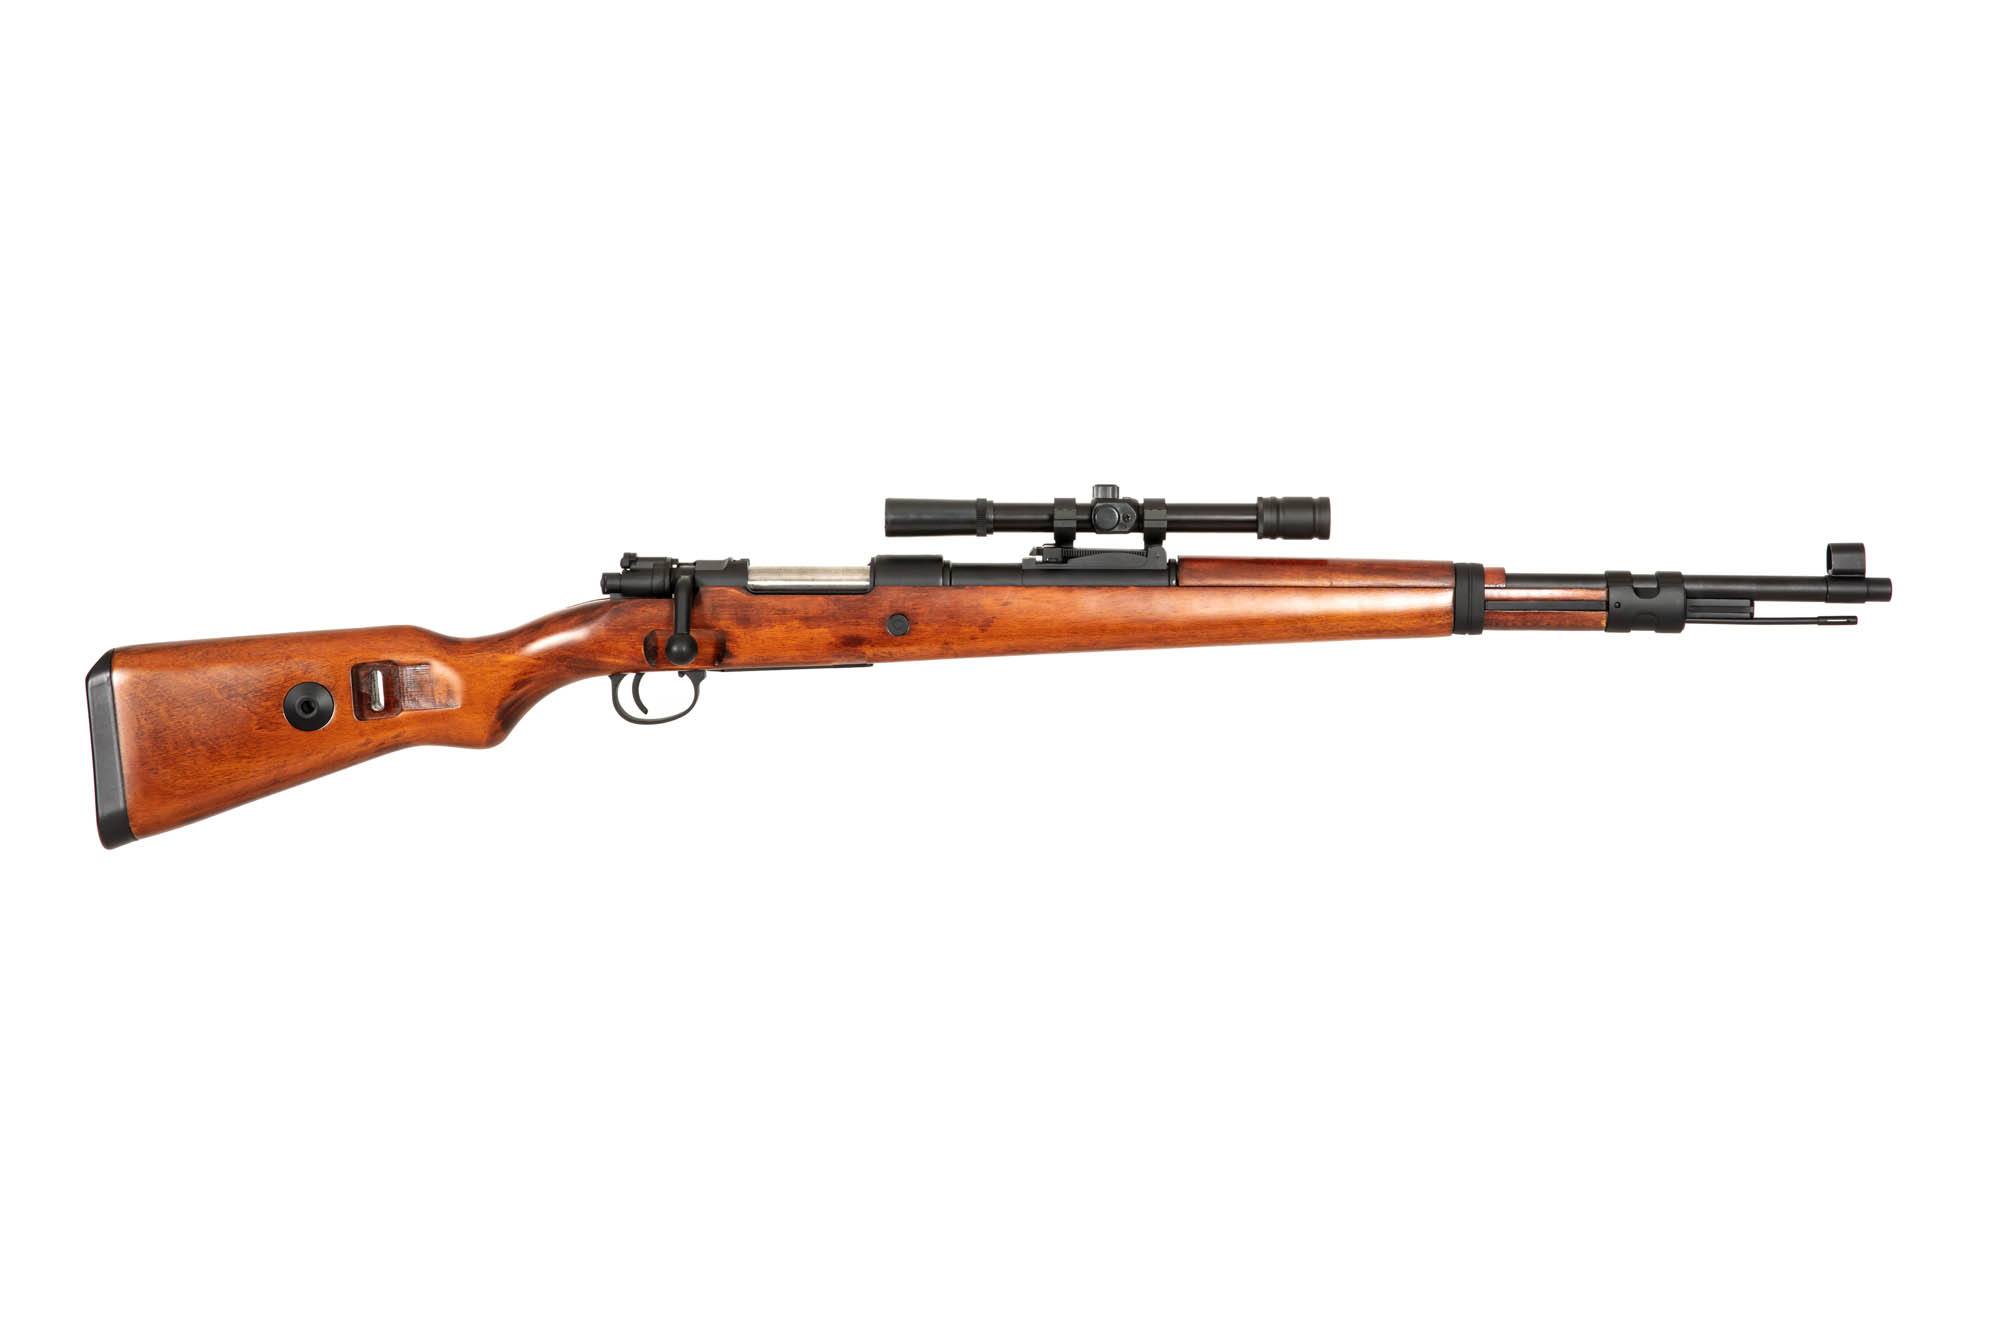 Kar98 Rifle Replica with scope (wood stock)